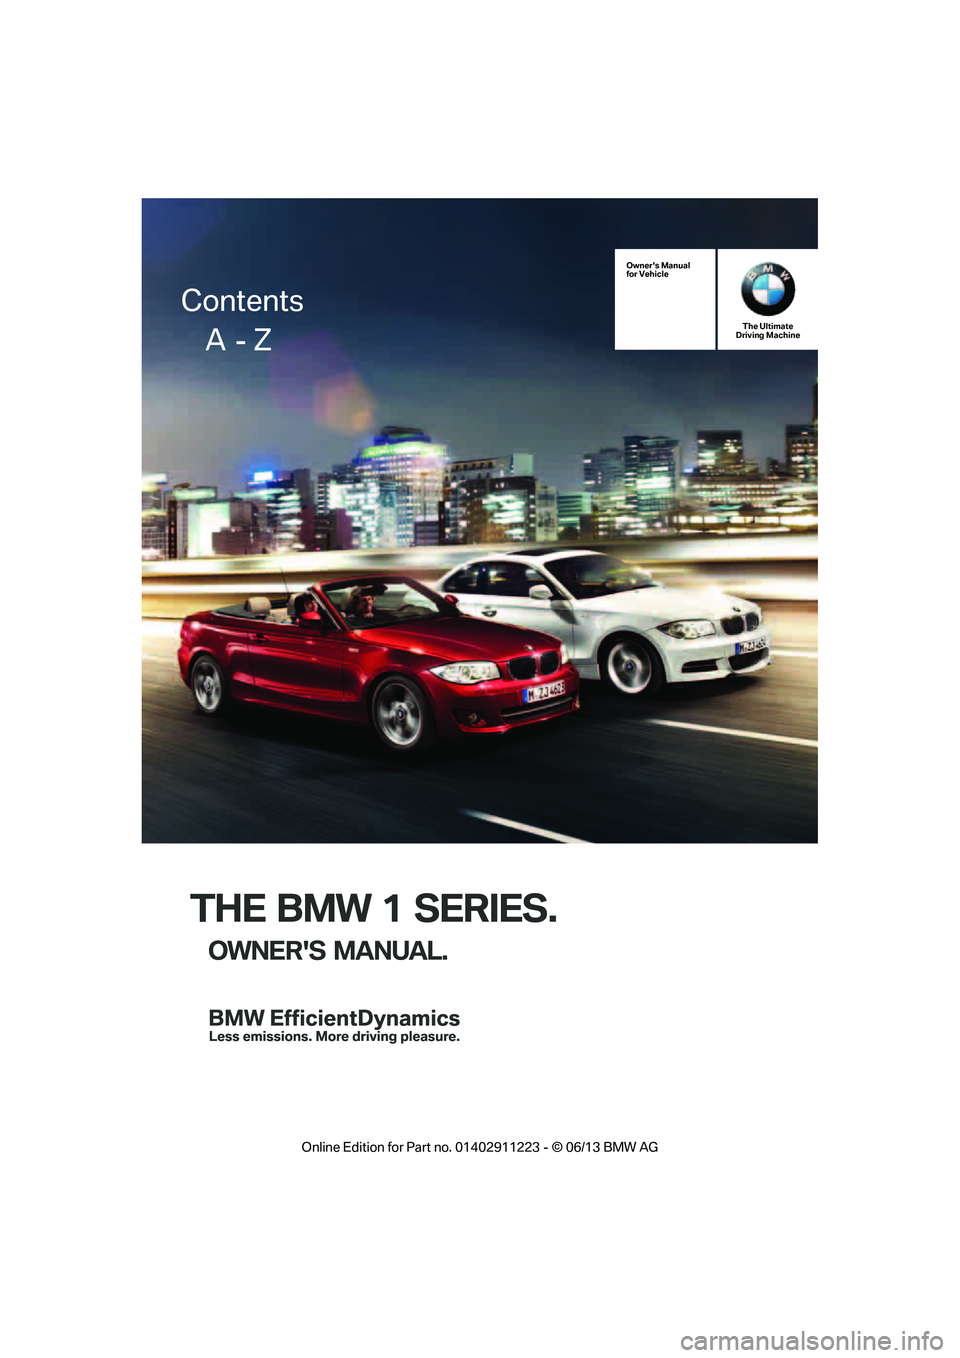 BMW 128I CONVERTIBLE 2013  Owners Manual THE BMW 1 SERIES.
OWNERS MANUAL.
Owners Manual
for VehicleThe Ultimate
Driving Machine
Contents
     A  - Z

�2�Q�O�L�Q�H �(�G�L�W�L�R�Q �I�R�U �3�D�U�W �Q�R� ����������� � �